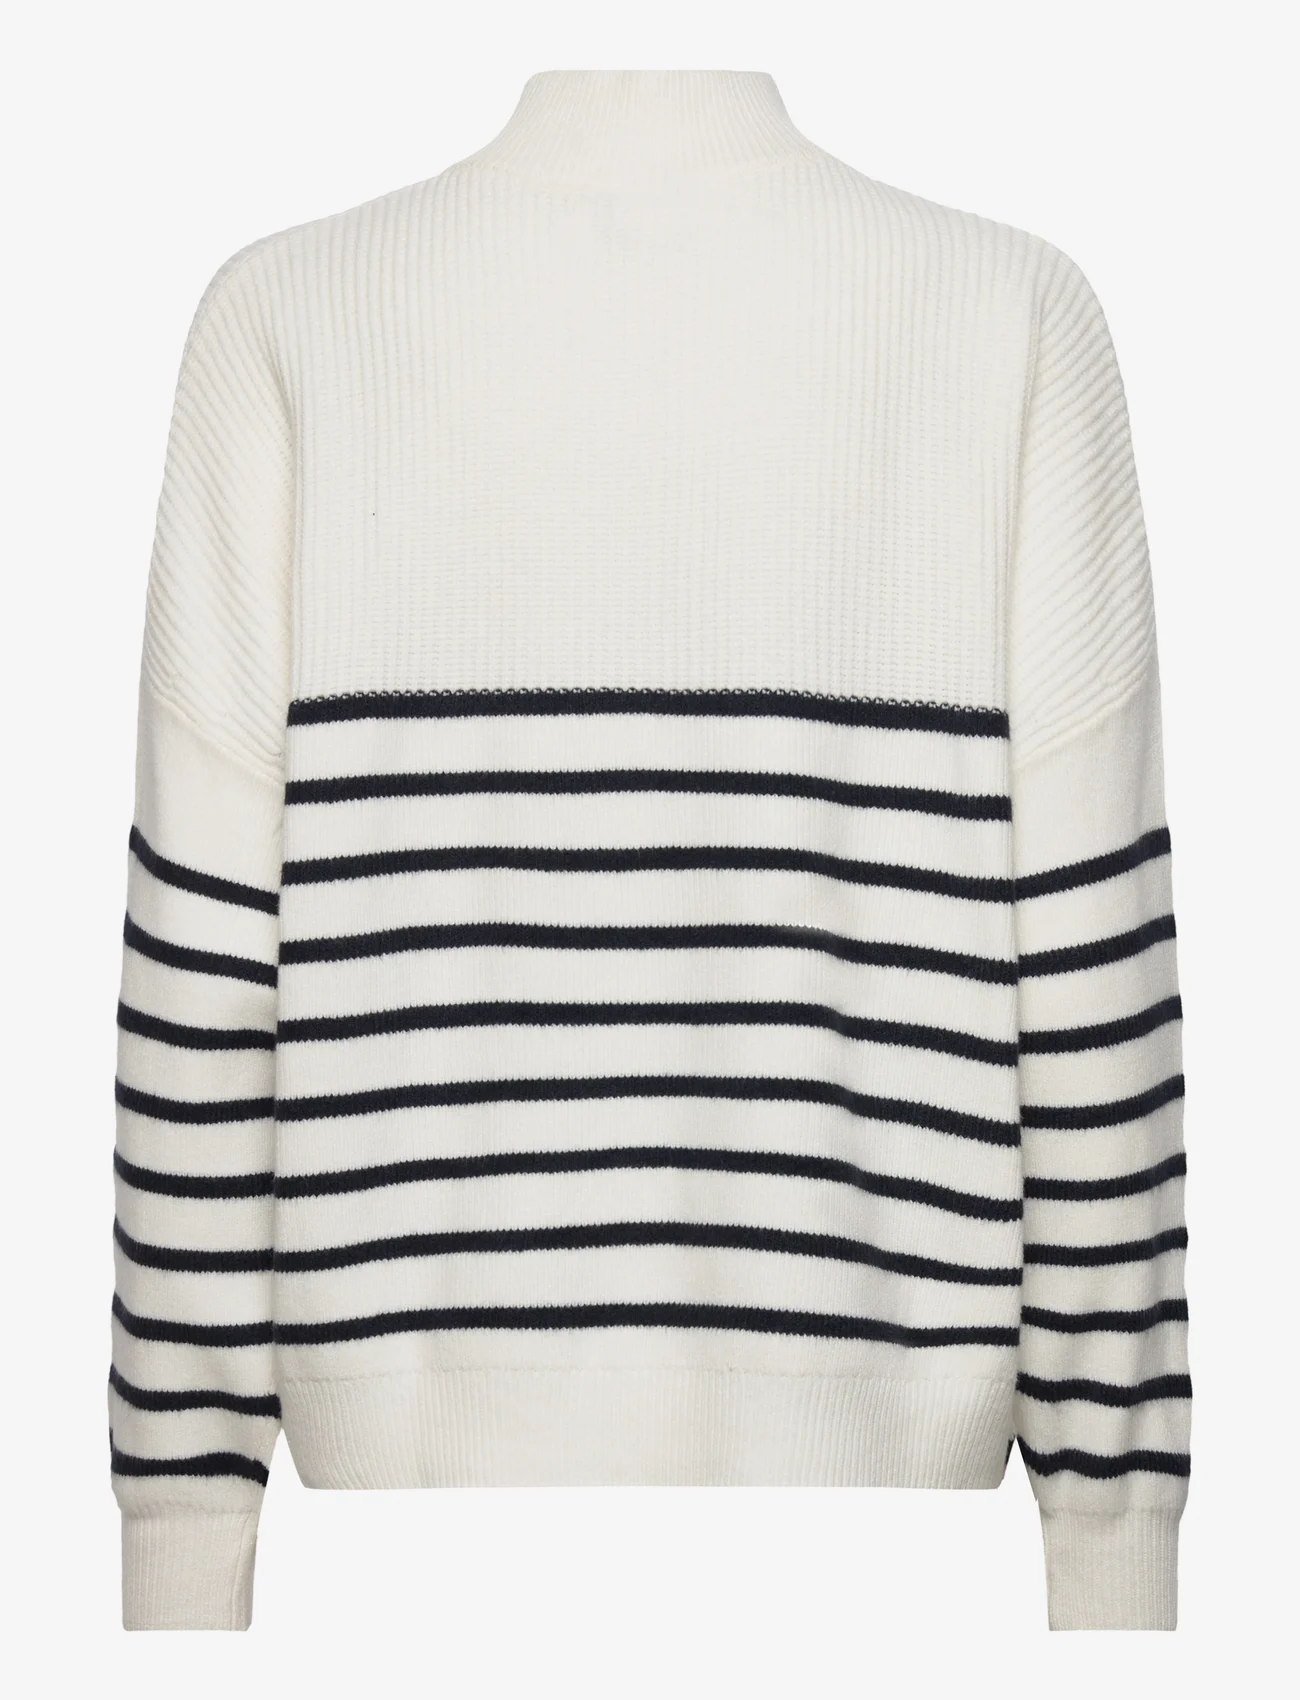 Mango - Striped sweater with zip - tröjor - navy - 1